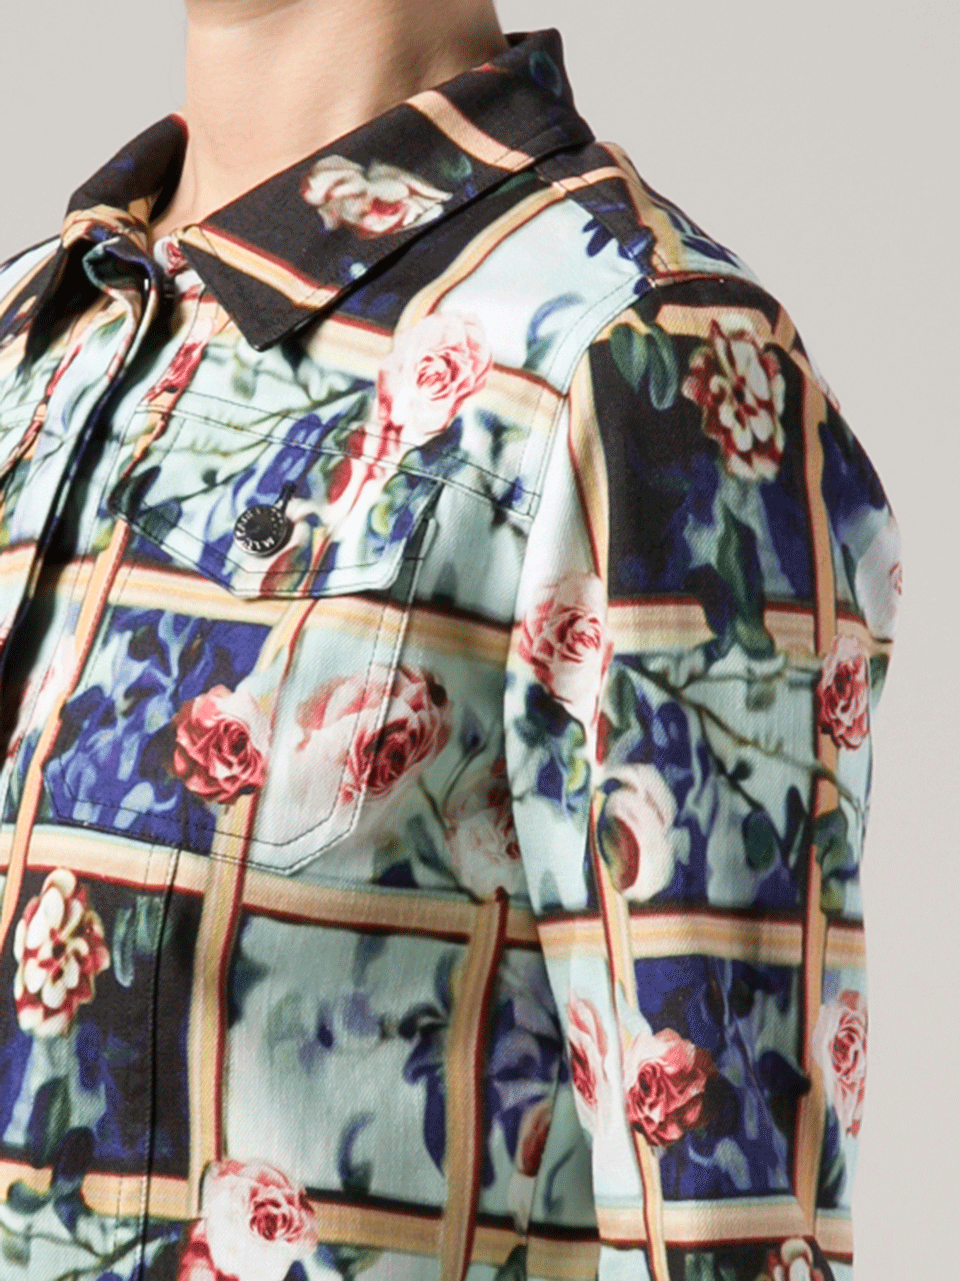 Cage Floral Print Denim Jacket CLOTHINGJACKETCASUAL MARY KATRANTZOU   